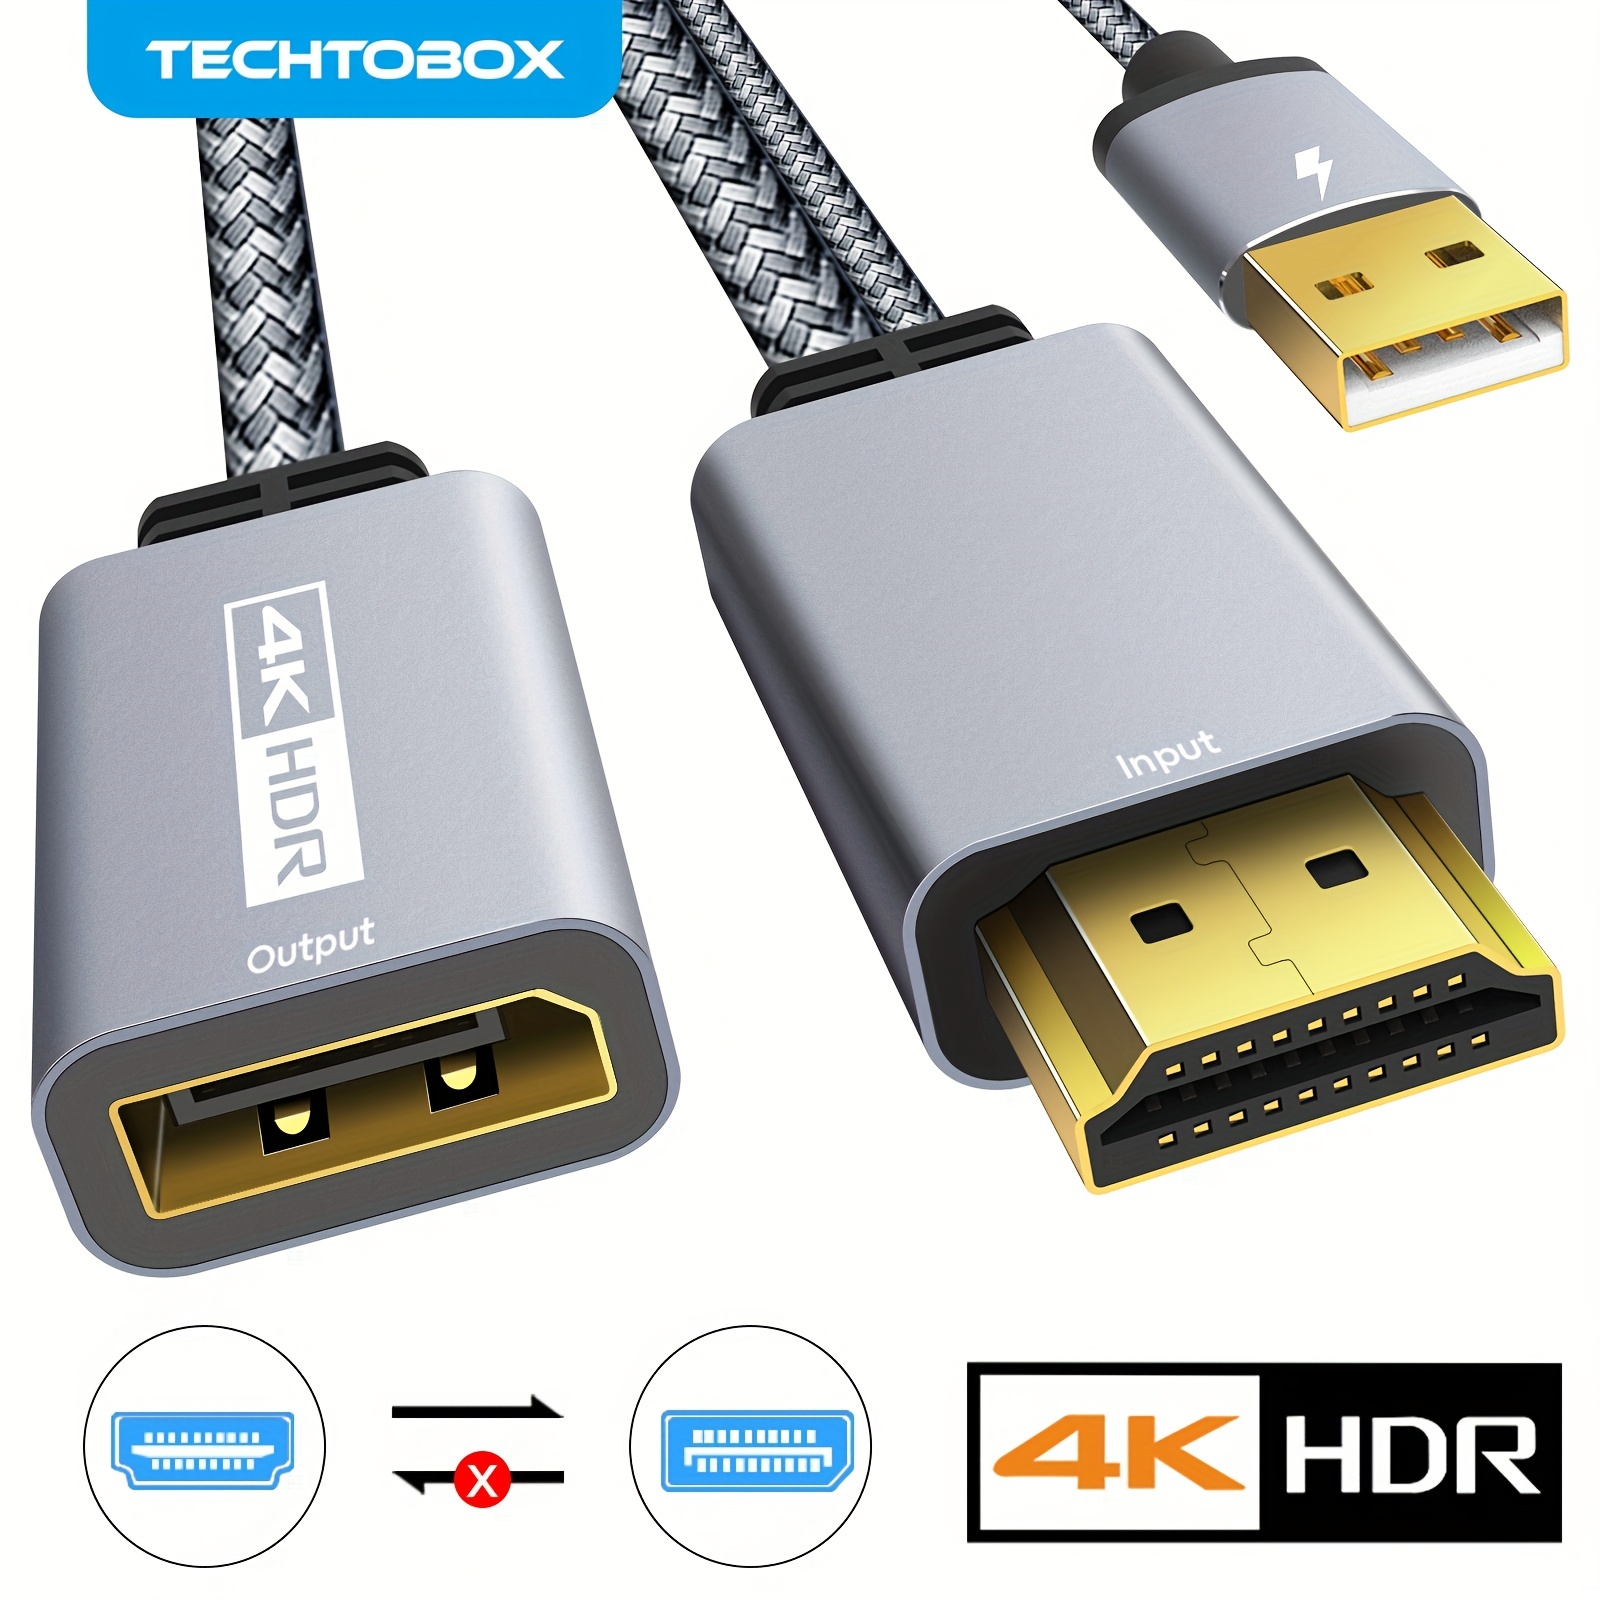 Display Port Mâle to HDMI Femelle Câble Adaptateur Convertisseur